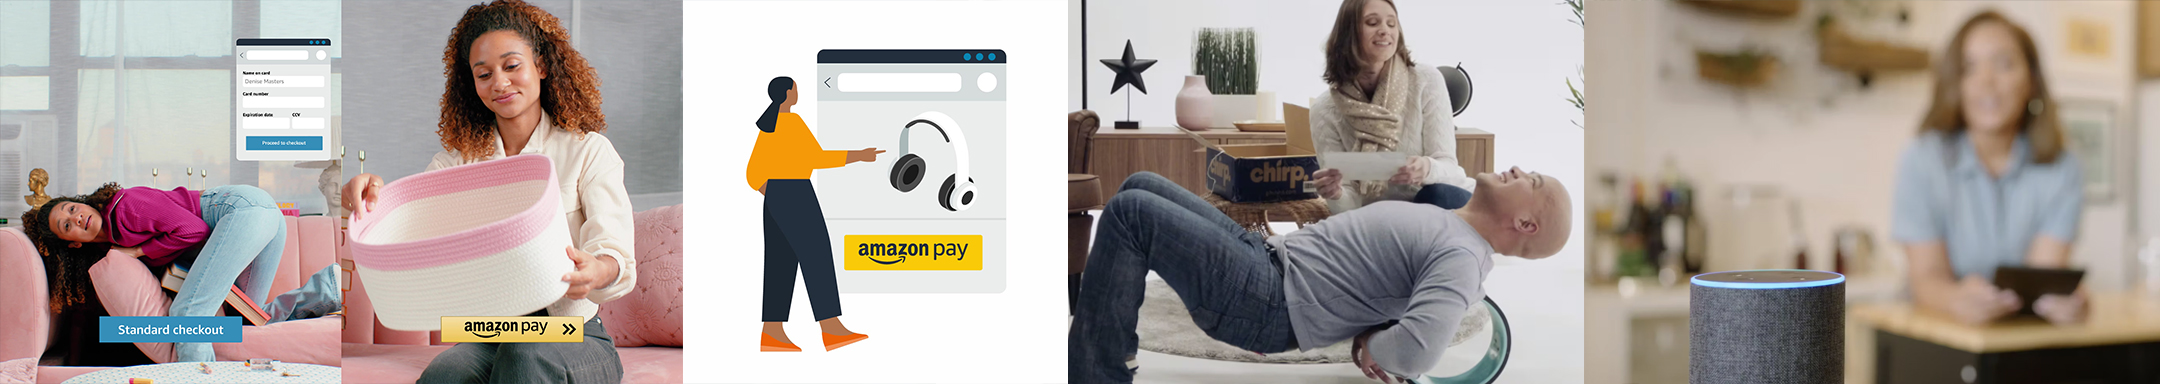 Amazon-Pay-Banner